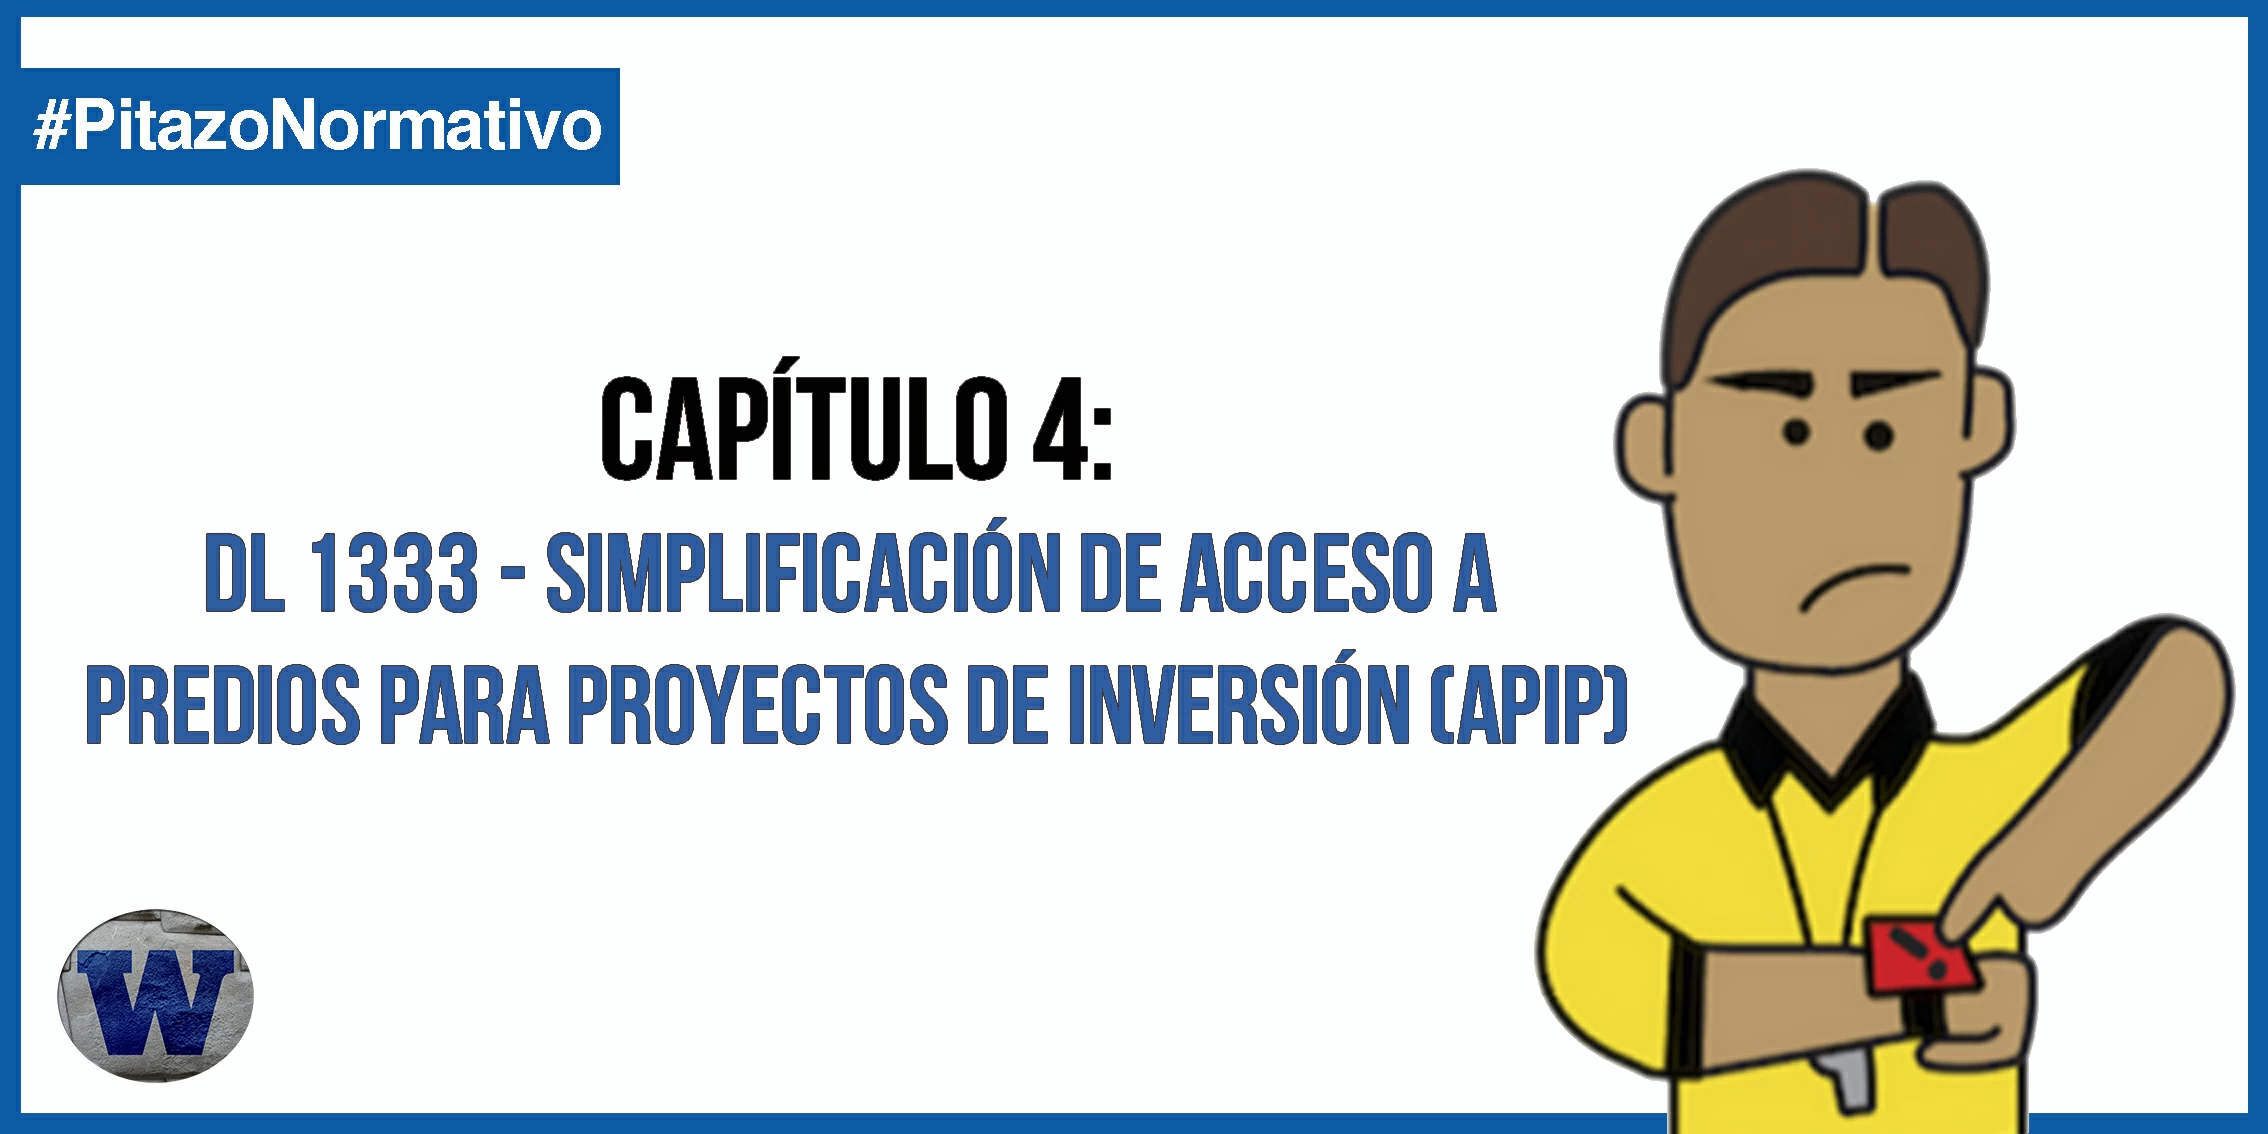 DL 1333: Simplificación de acceso a predios para proyectos de inversión (APIP)